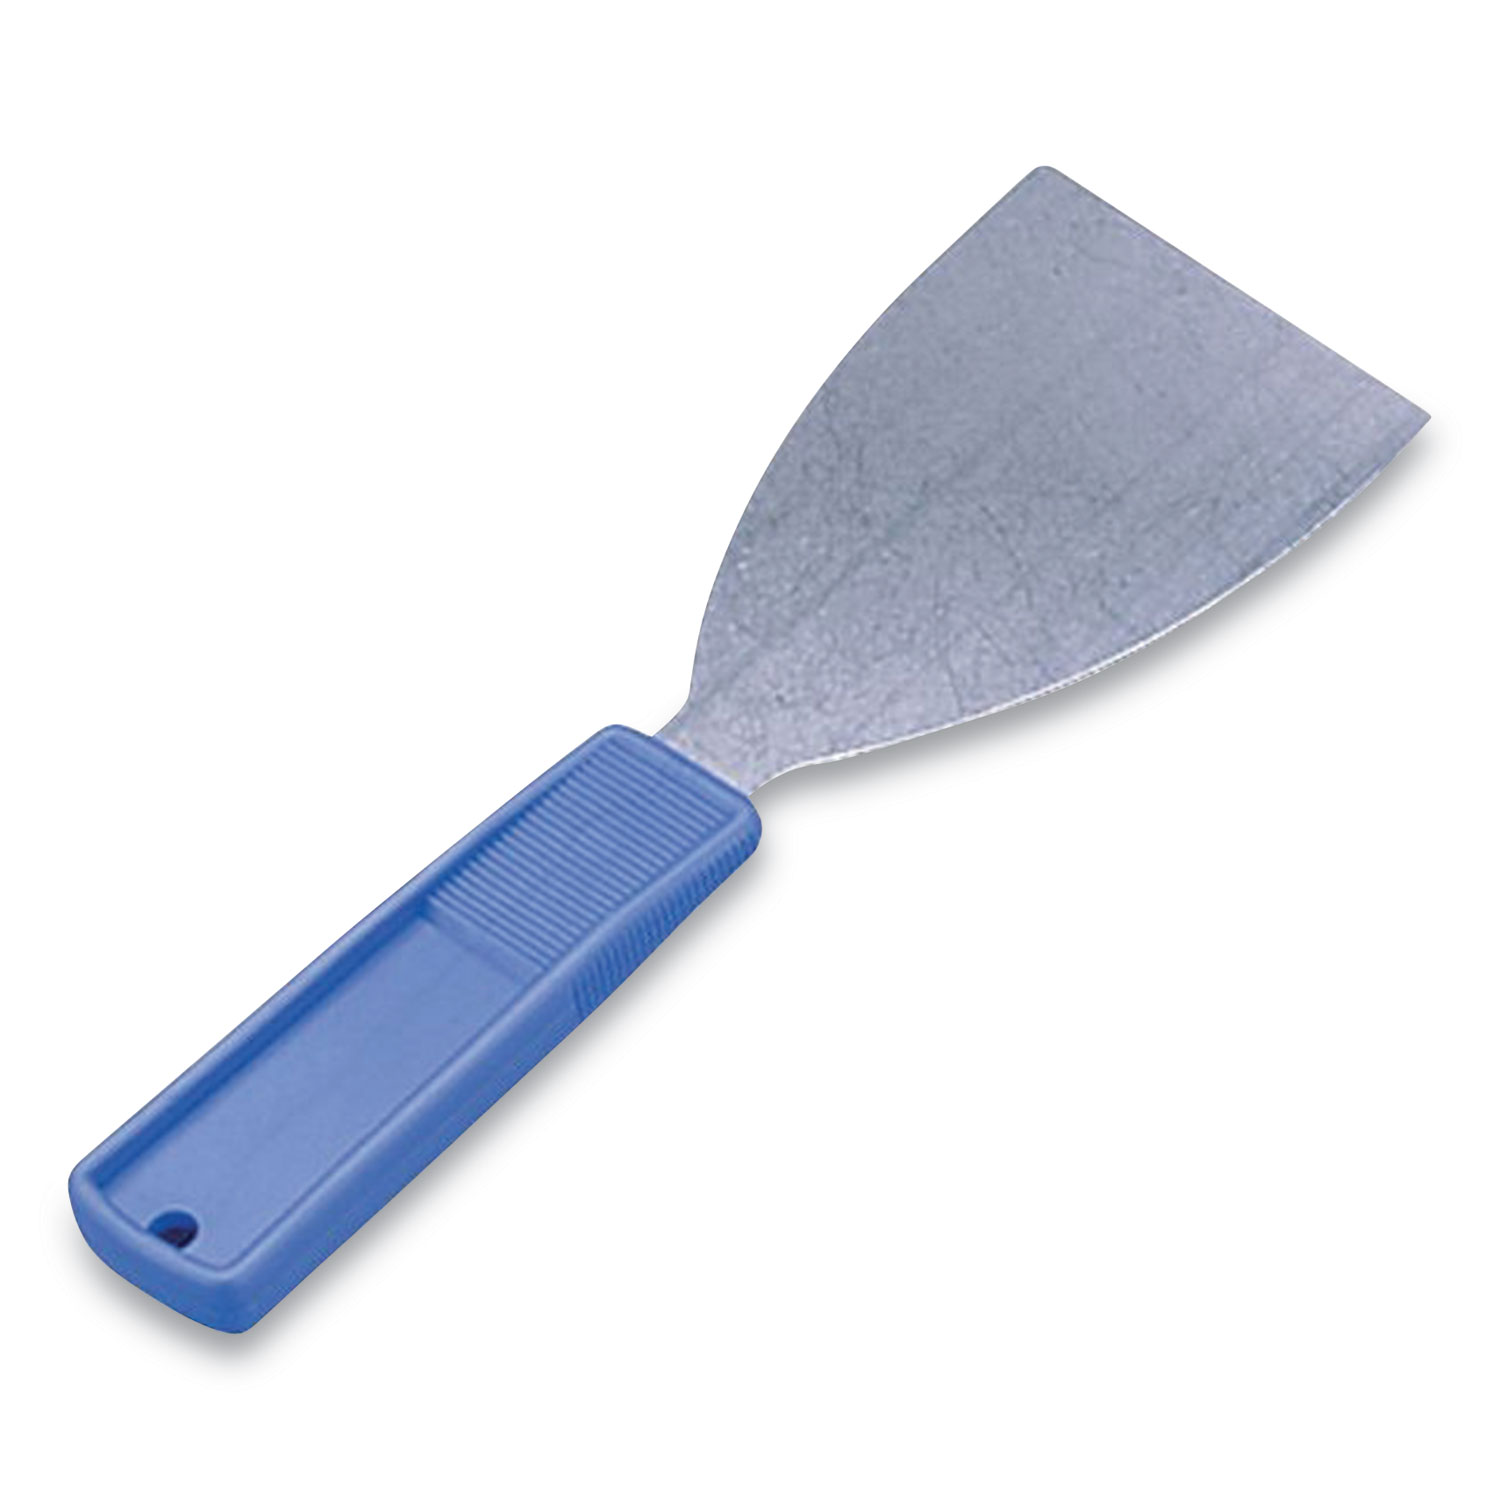  Impact 3401DZ Putty Knife, 3W Blade, Stainless Steel/Polypropylene, Blue (IMP749469) 